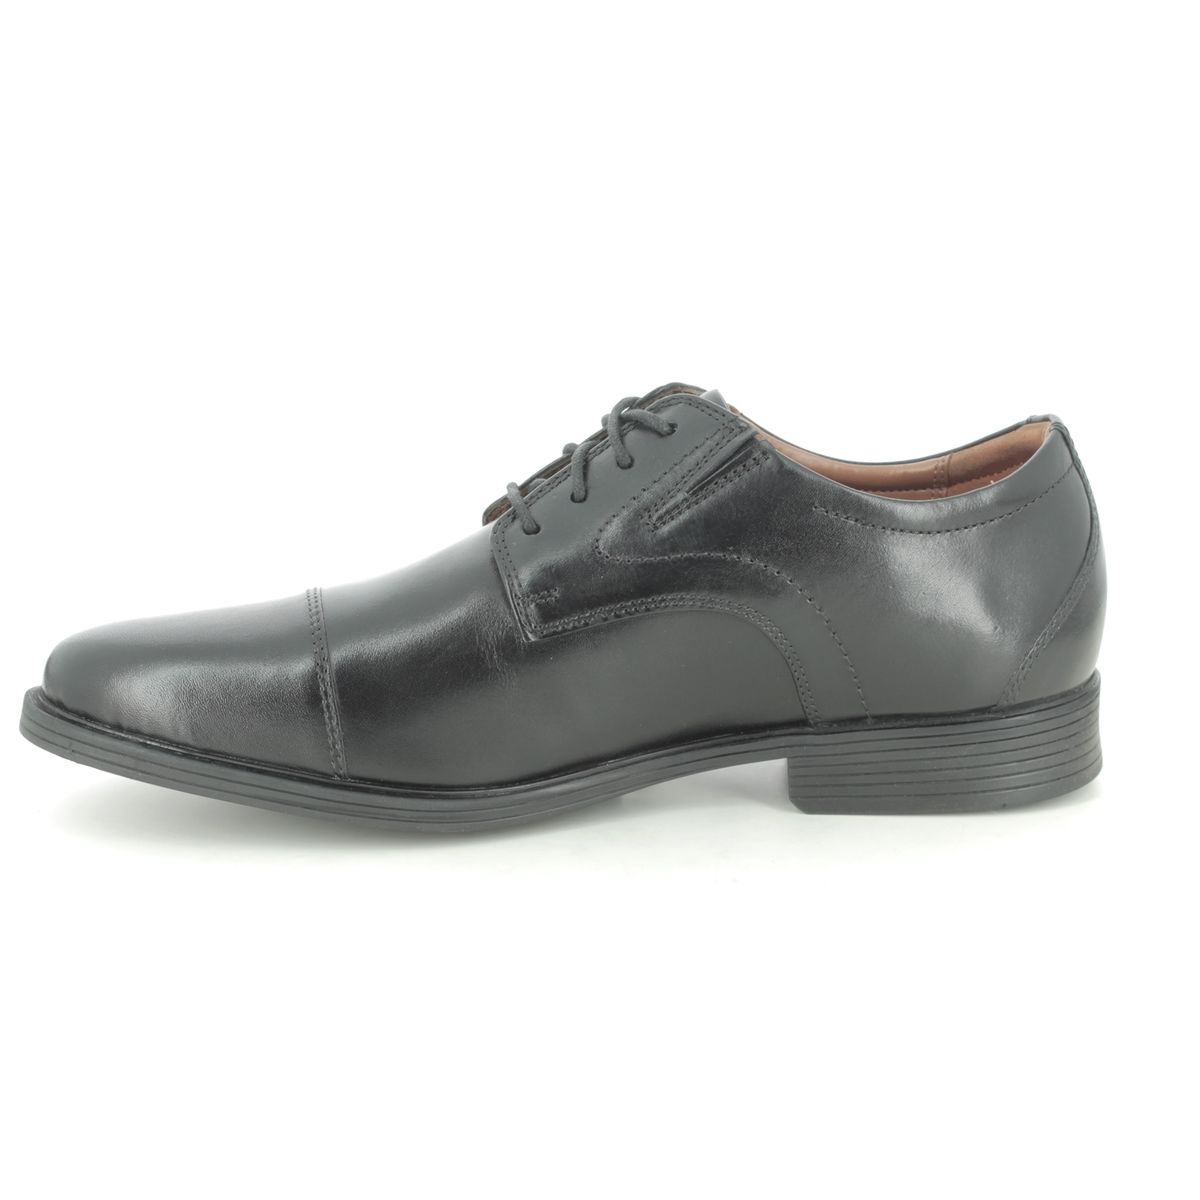 Clarks Whiddon Cap Black leather Mens formal shoes 5291-28H